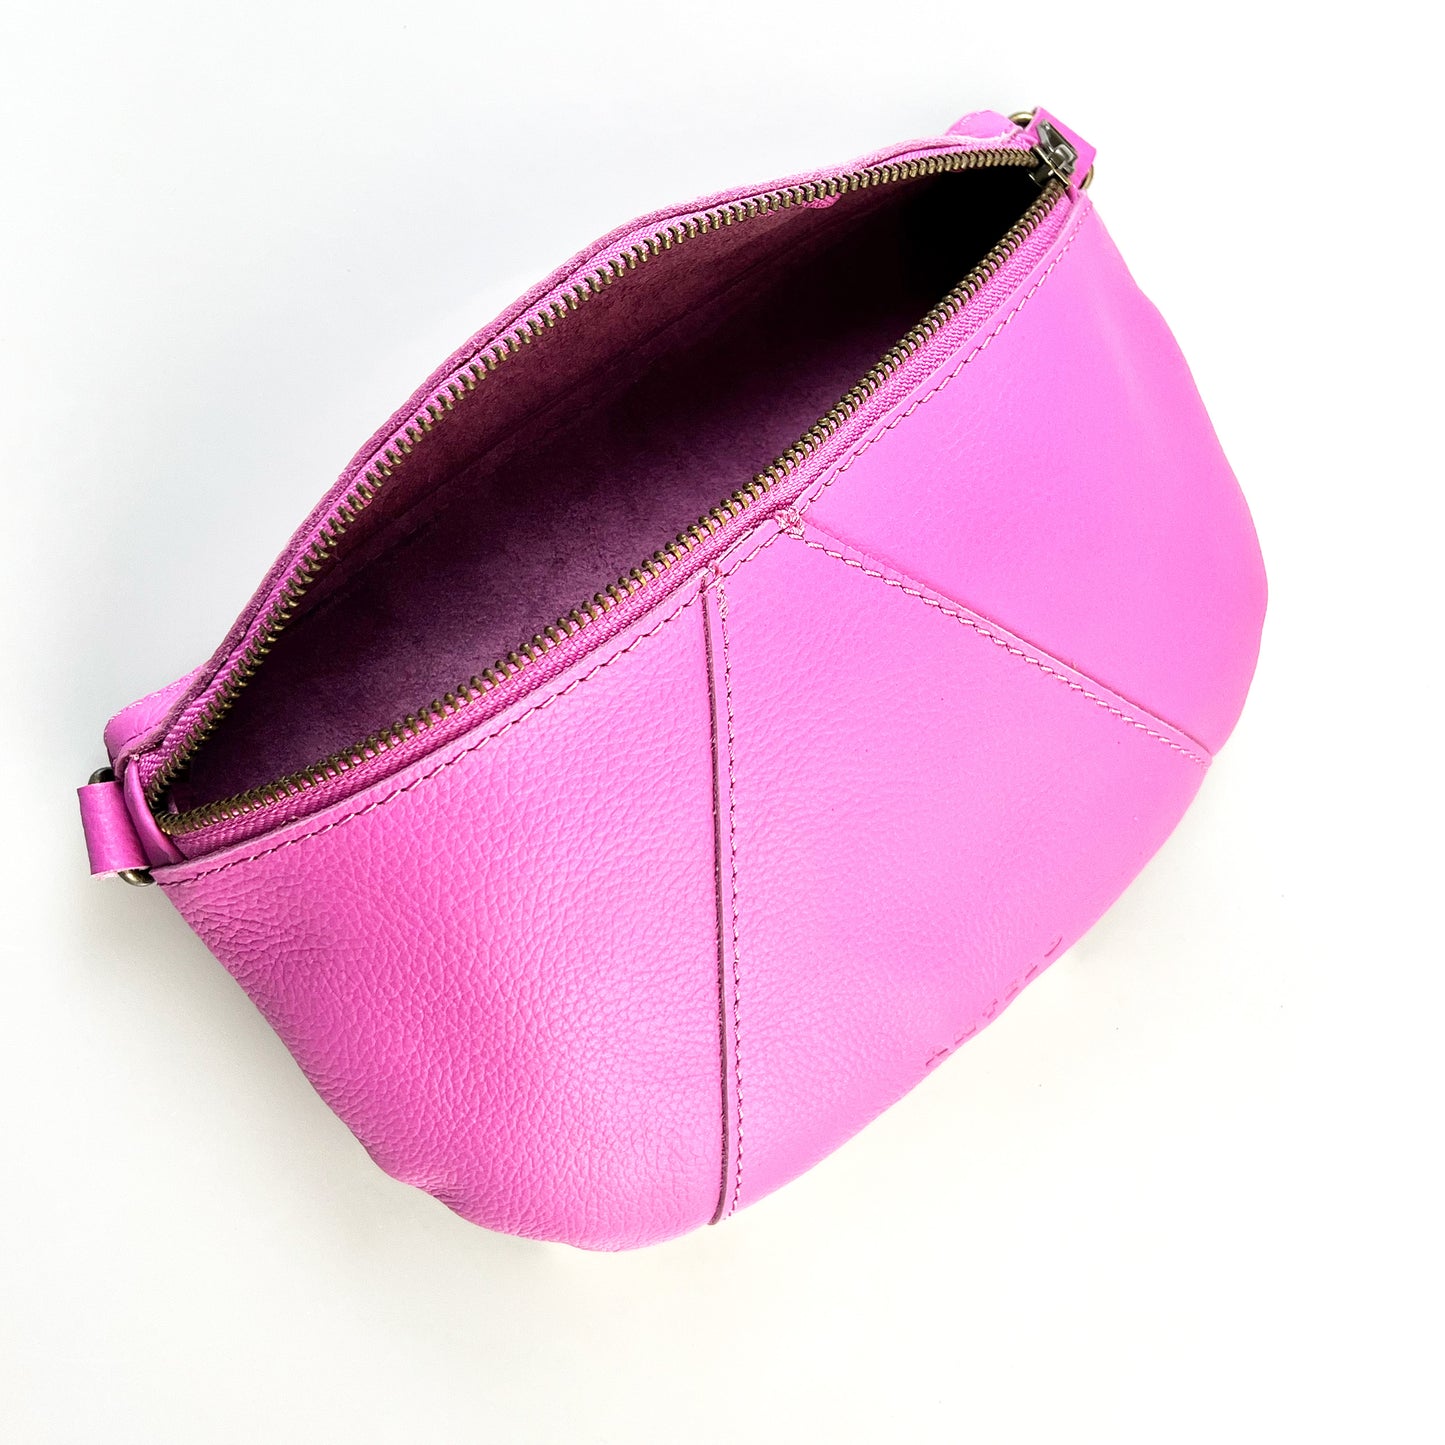 Ruby Classic leather adjustable moon-bag crossbody